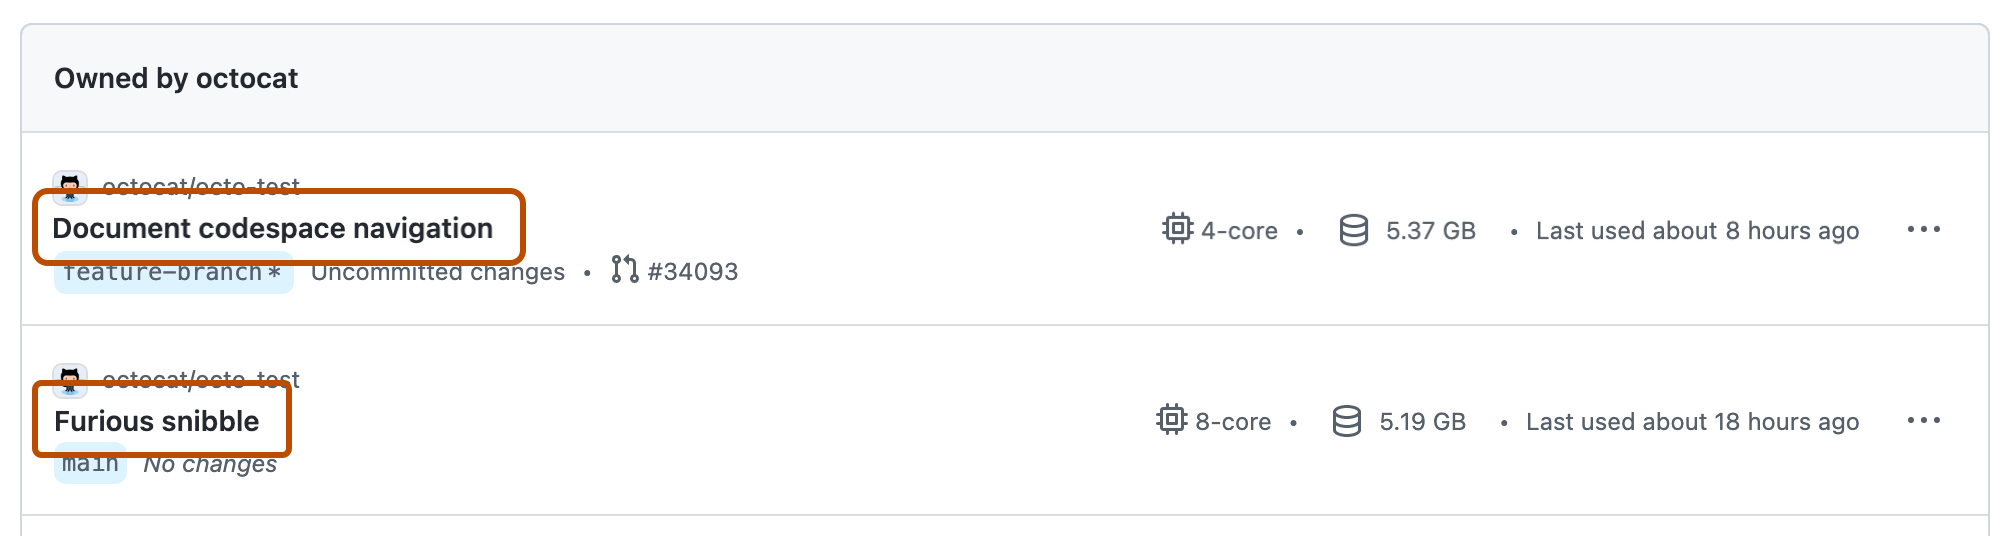 GitHub 上两个 codespace 列表的屏幕截图。 codespace 的名称以深橙色边框突出显示。